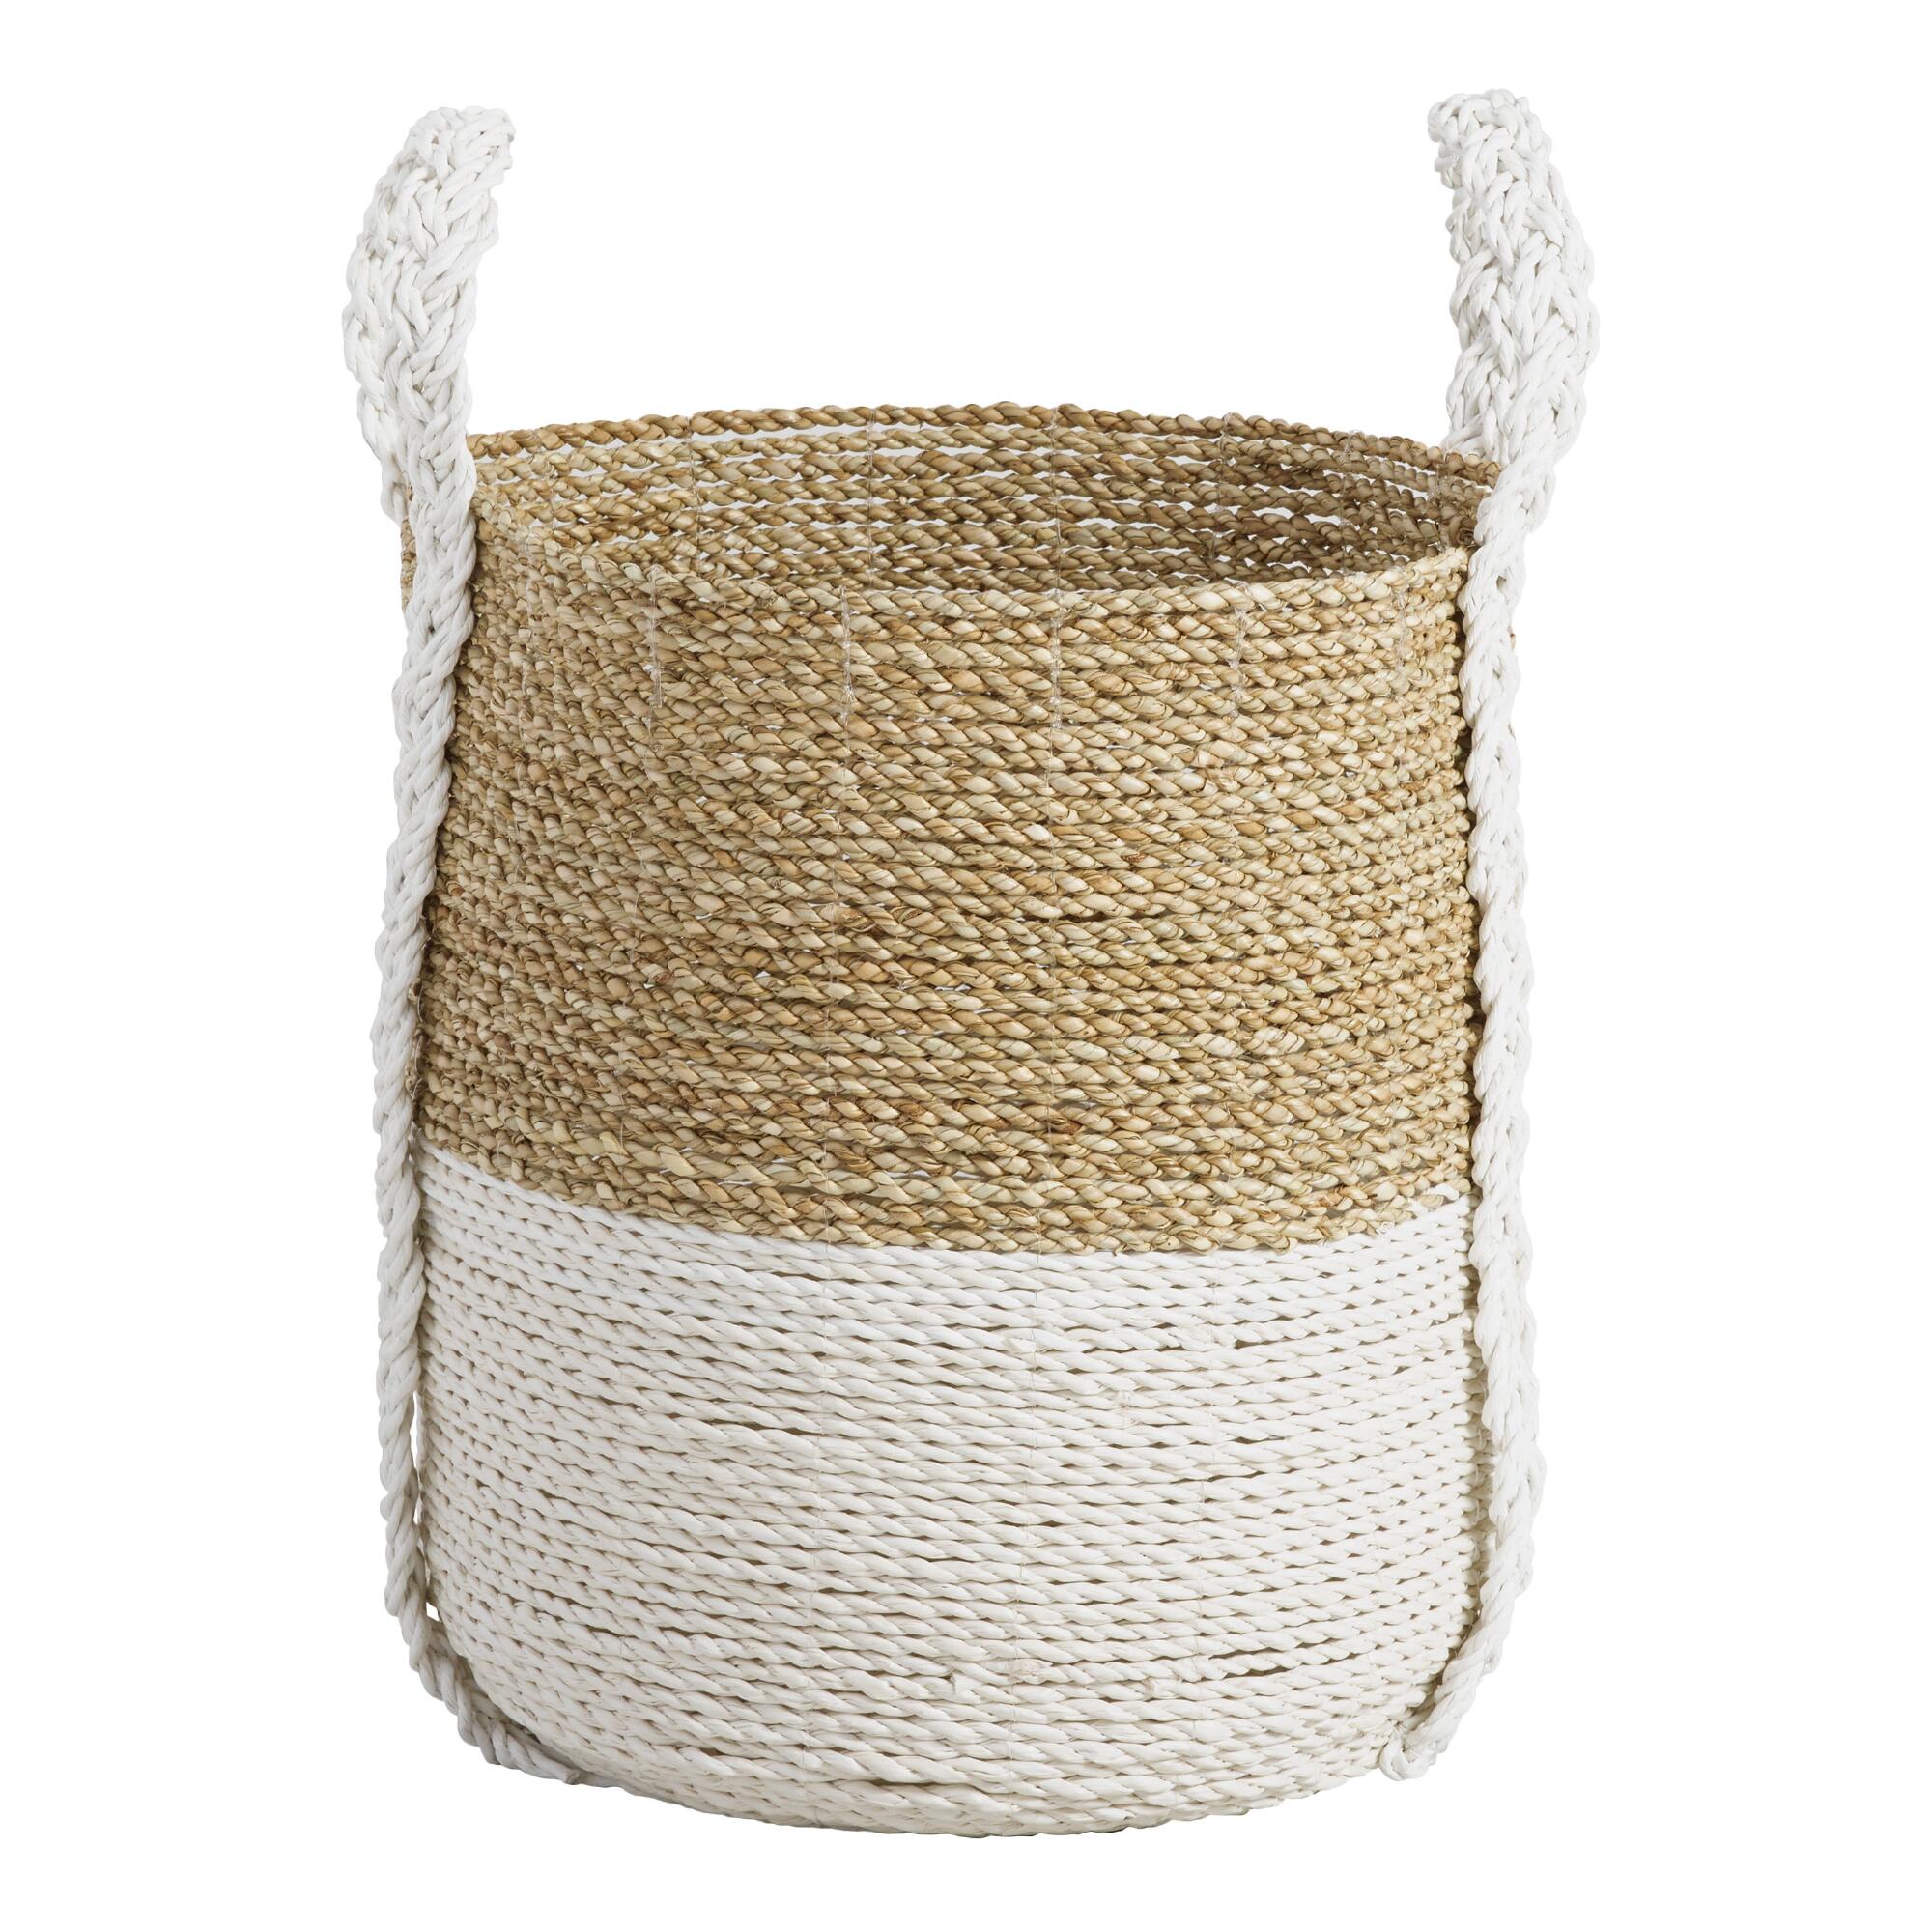 Medium Two Tone Seagrass Bianca Tote Basket: White - Natural Fiber by World Market